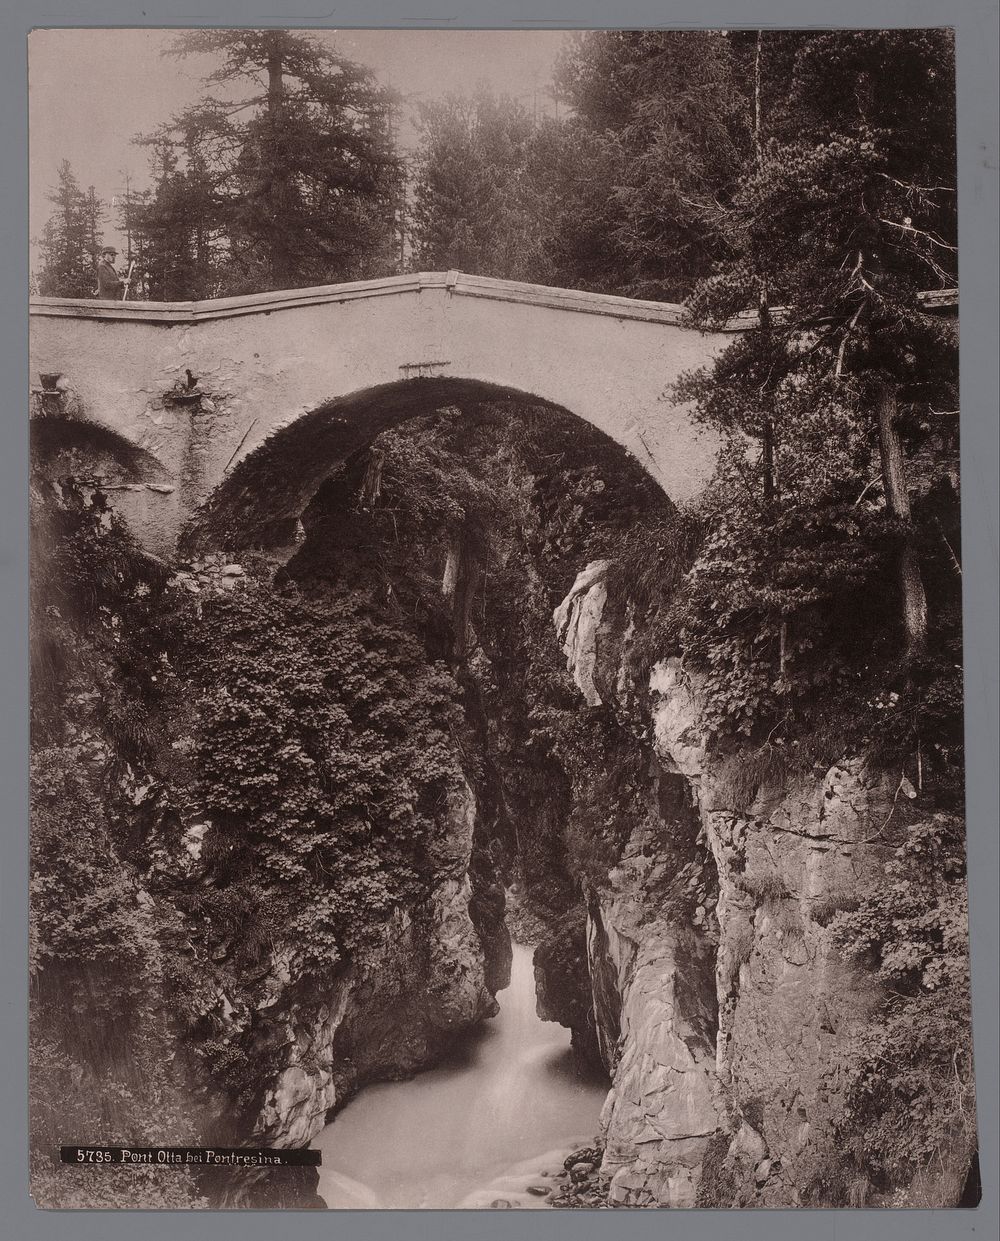 Brug "Pont Otta" bij Pontresina, kanton Graubünden, Zwitserland (c. 1890 - c. 1915) by anonymous